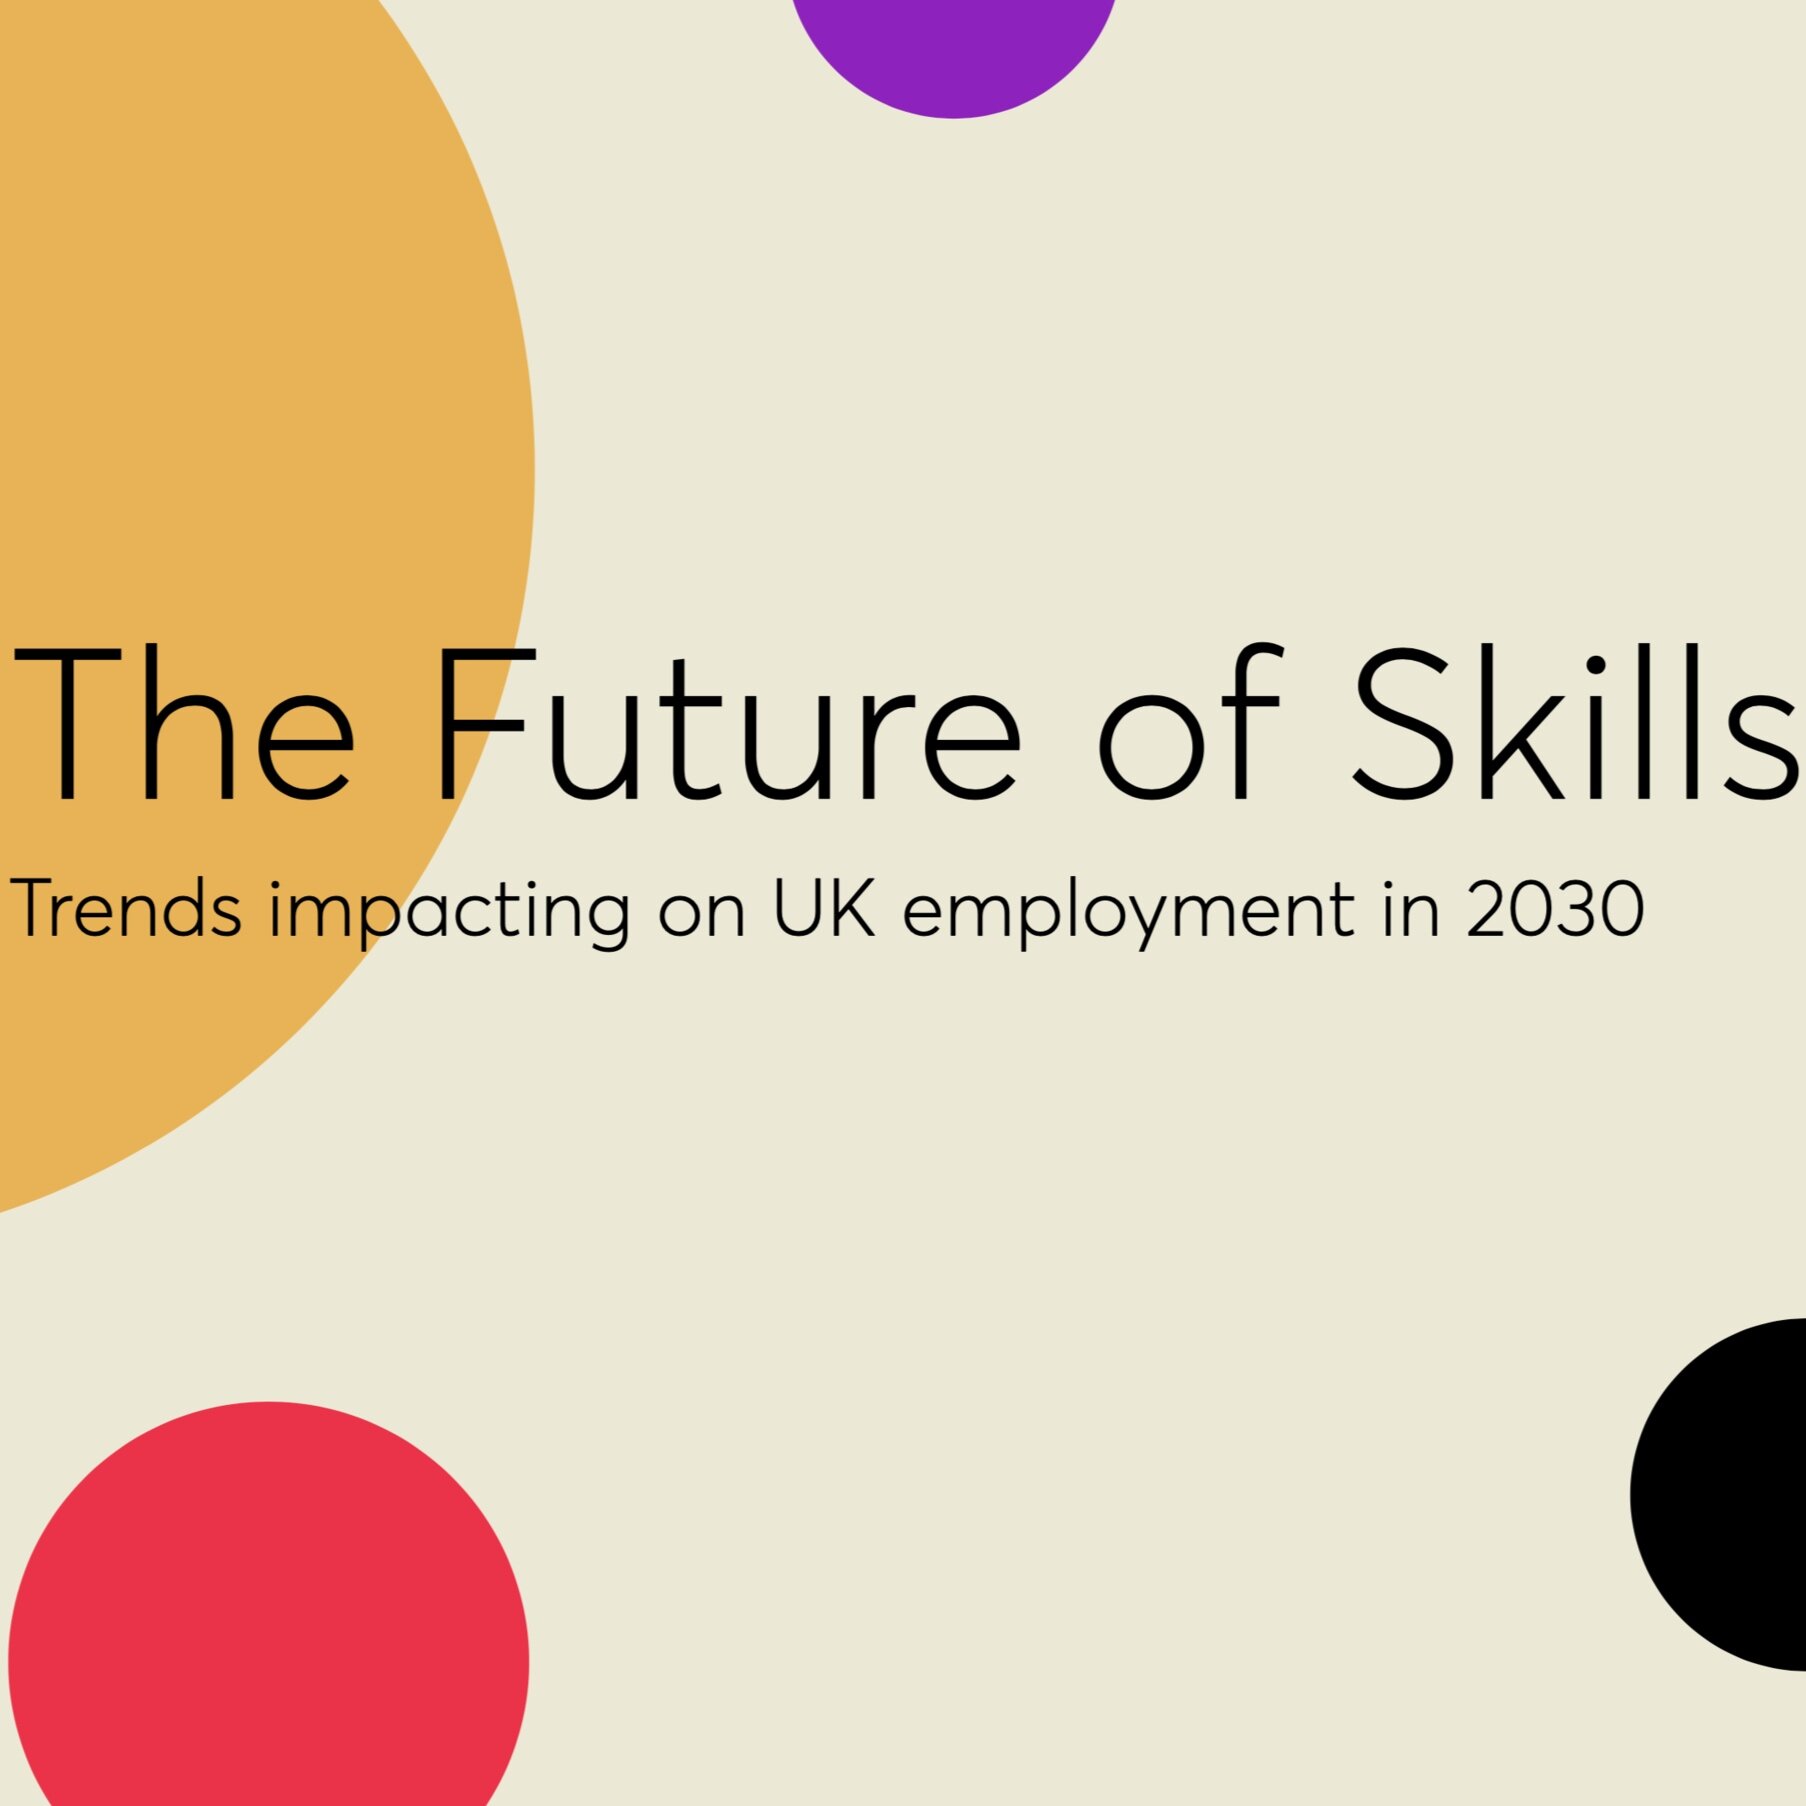 The Future of Skills 2030